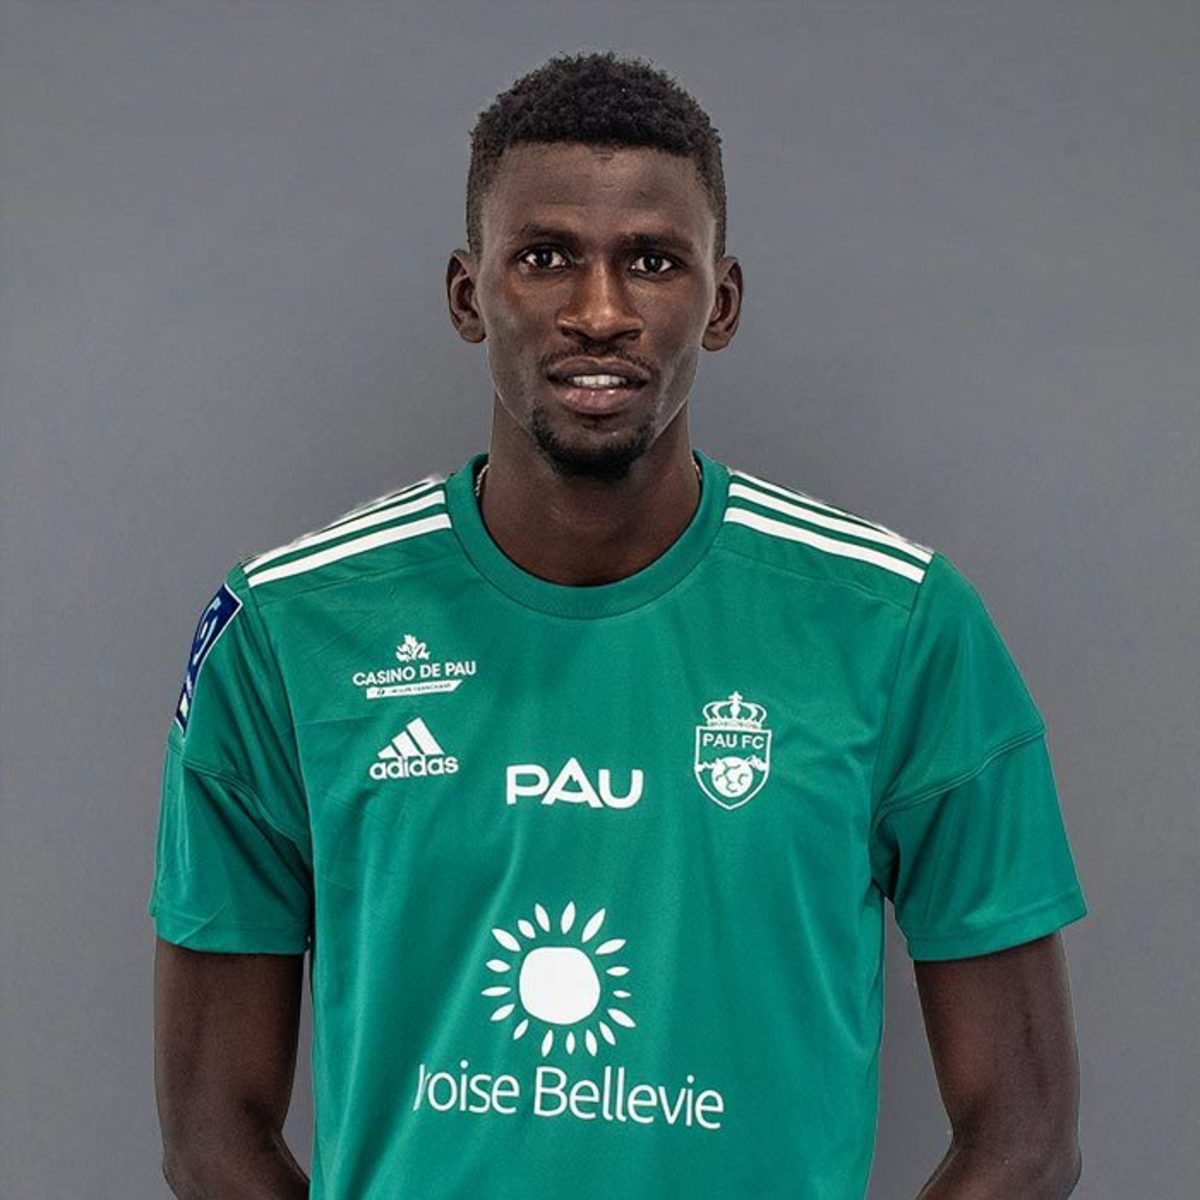 Massamba Ndiaye plays for the Pau FC in the French Ligue 2. 